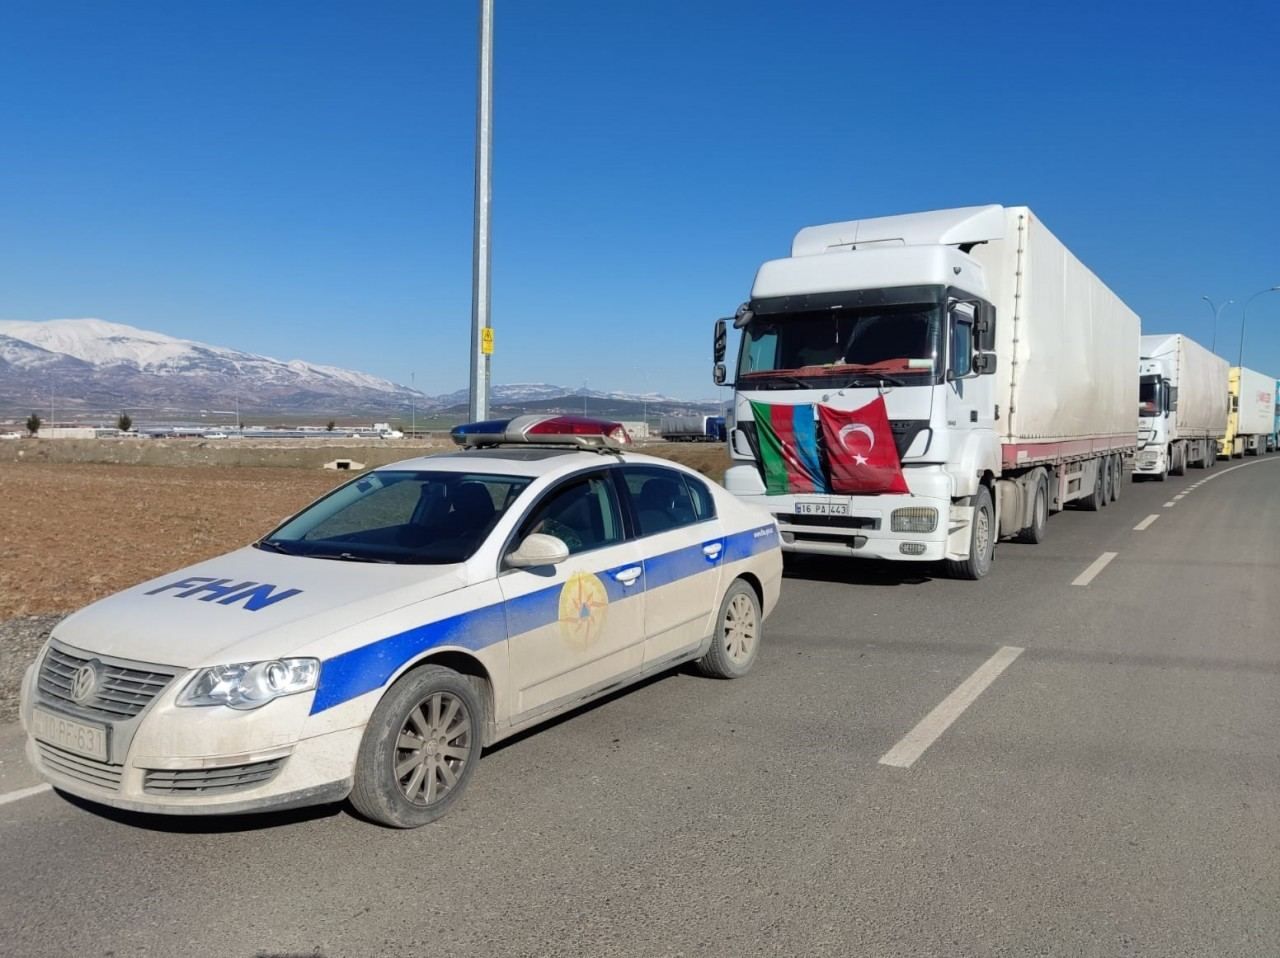 Azerbaijan's third humanitarian aid convoy arrives at quake-hit Turkiye [PHOTO/VIDEO]